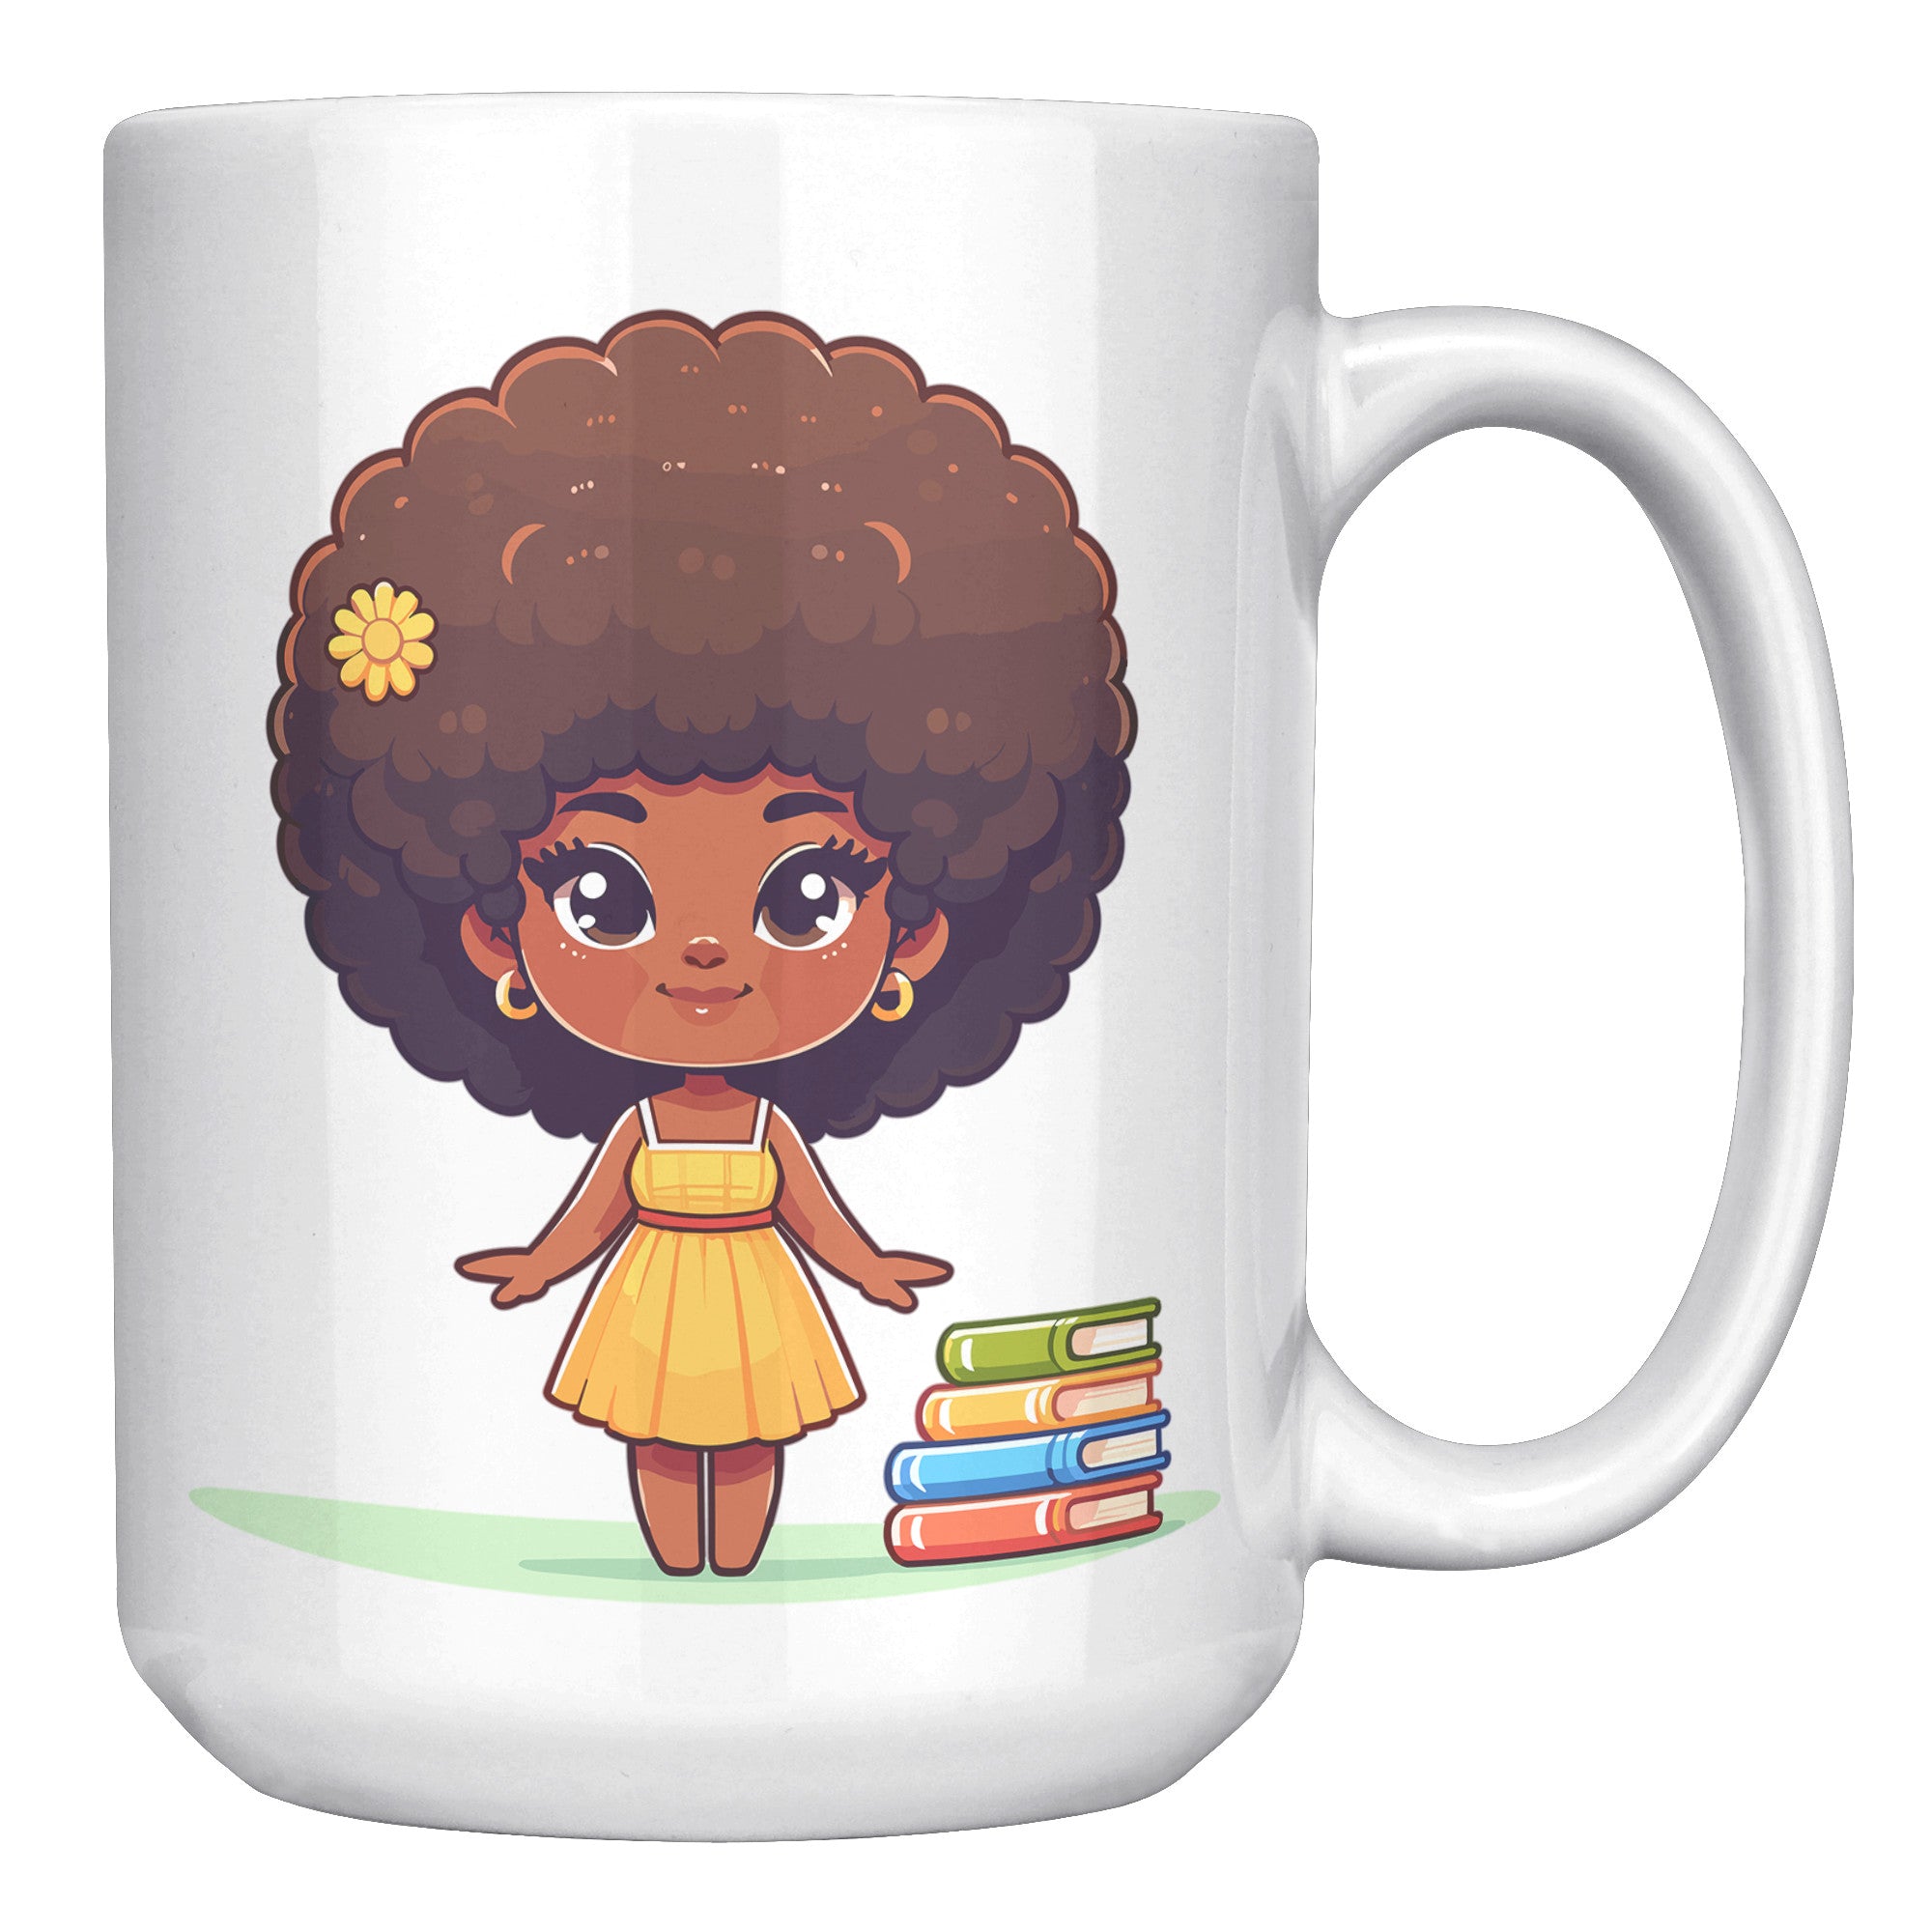 15 oz Custom Teacher's Delight Coffee Mug - Cartoon Educator Design - Heartwarming Gift for Teachers - Perfect for Daily Inspiration!